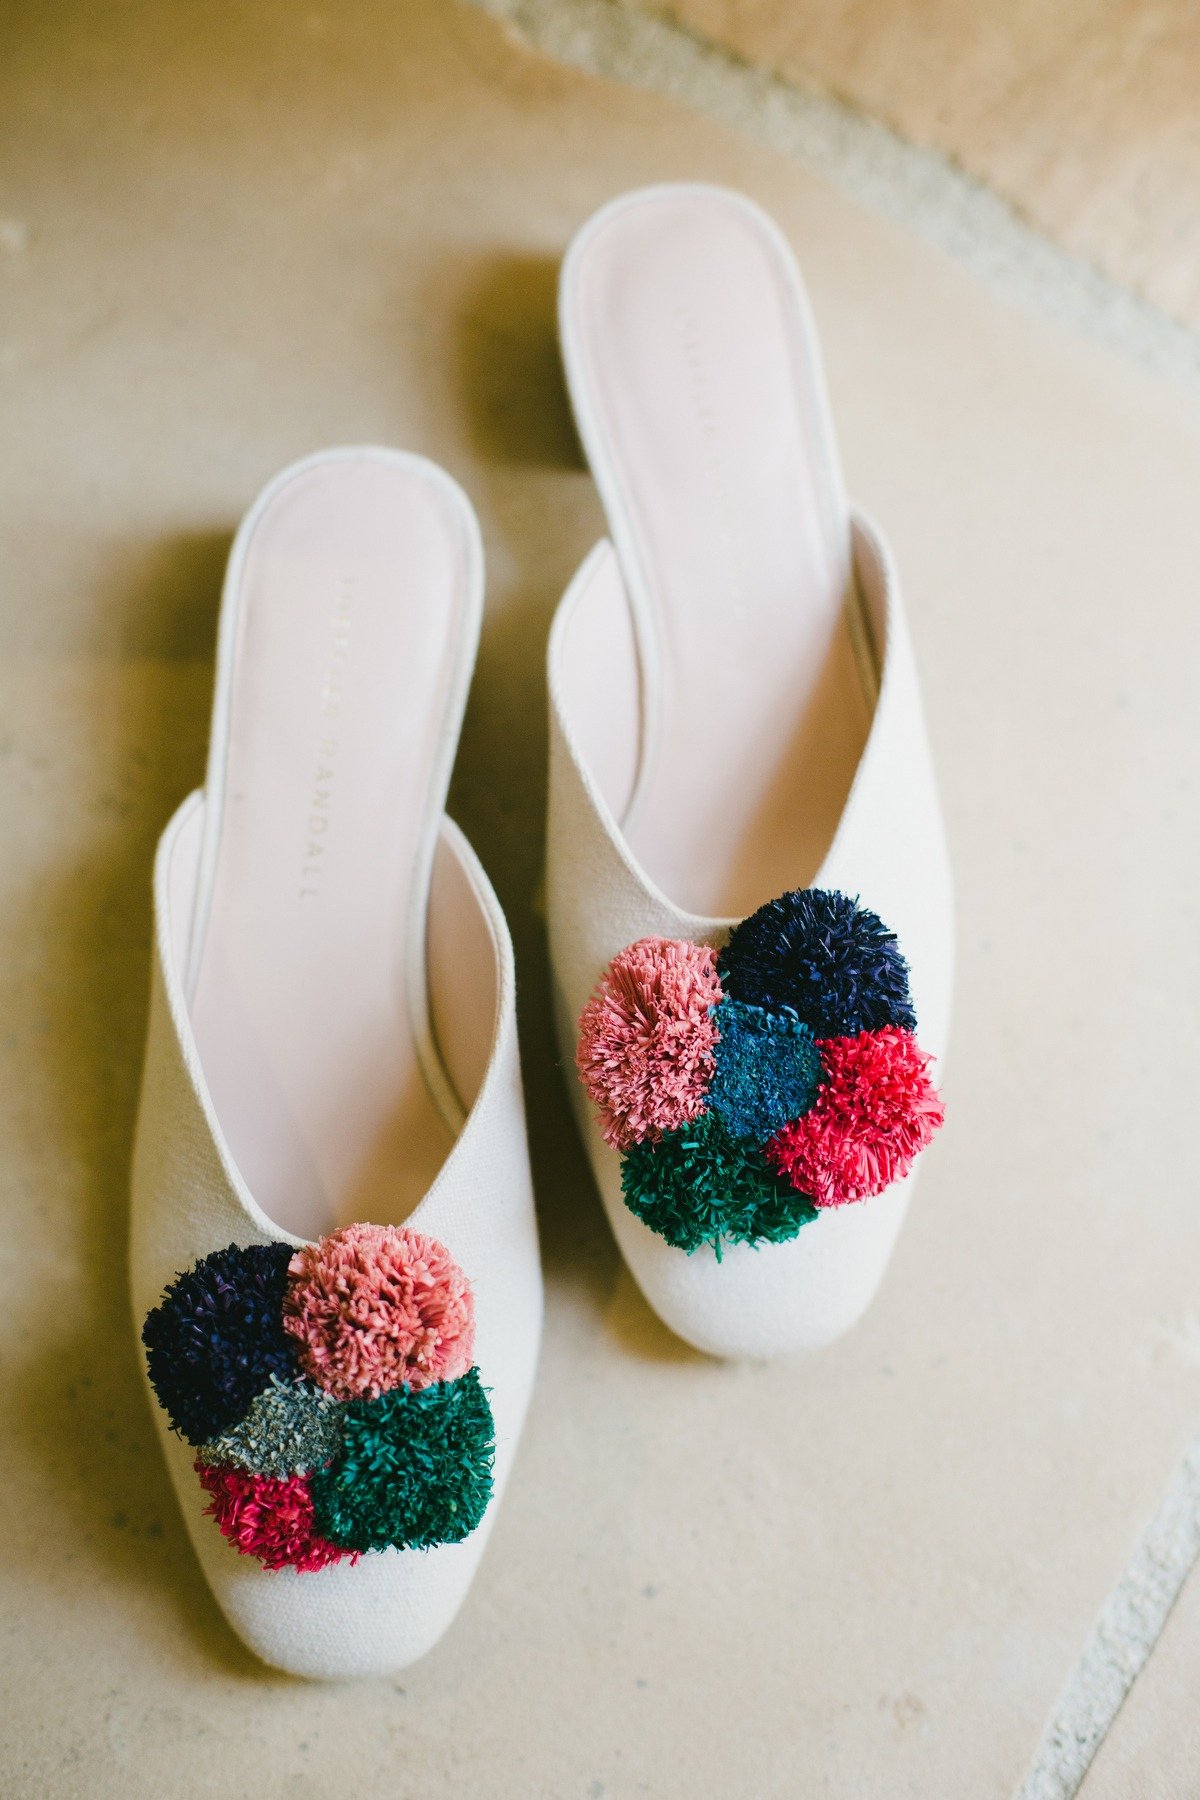 Colorful bridal shoes by Loeffler Randall